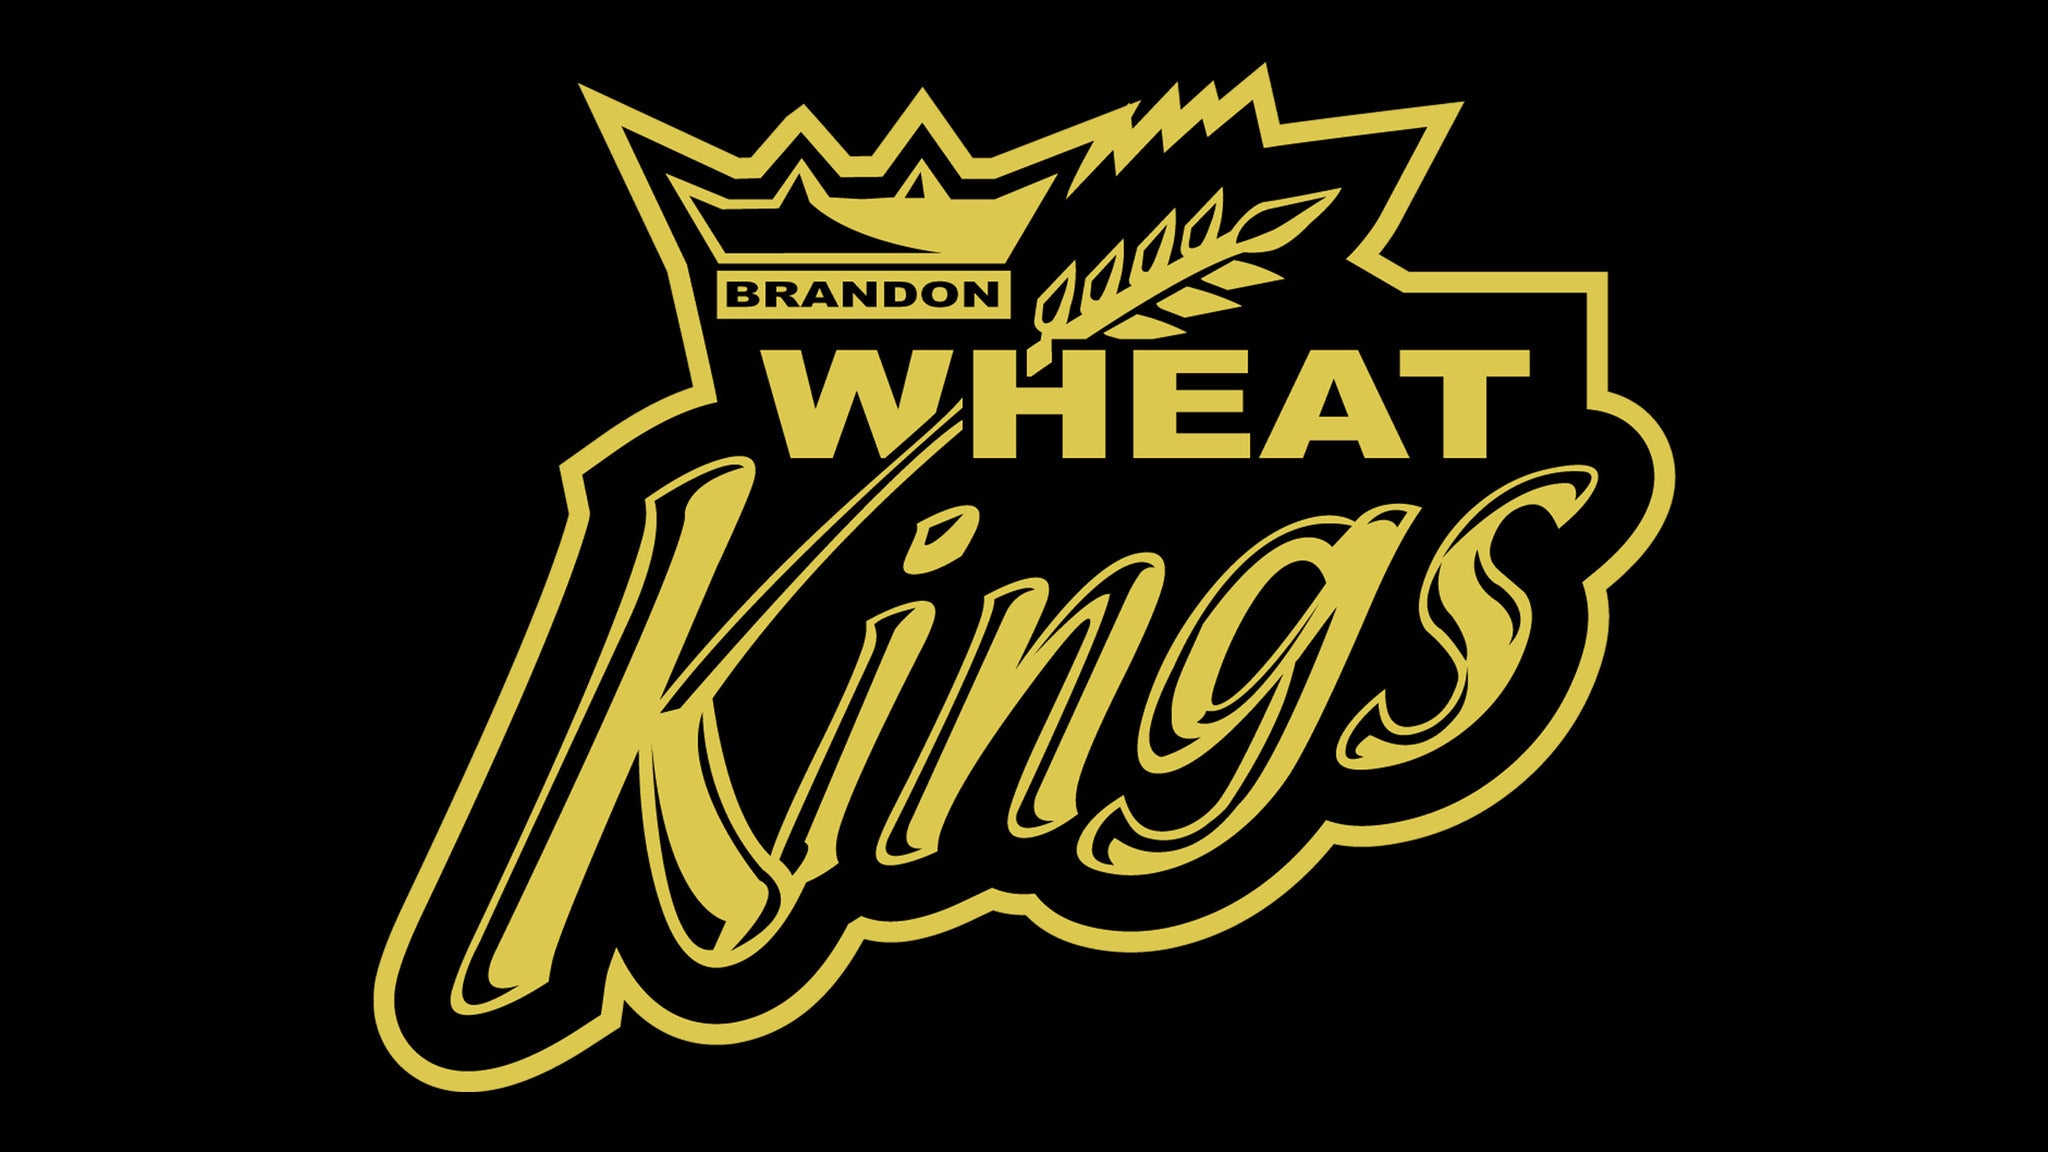 Brandon Wheat Kings vs. Regina Pats in Brandon promo photo for Family 4 Pack presale offer code